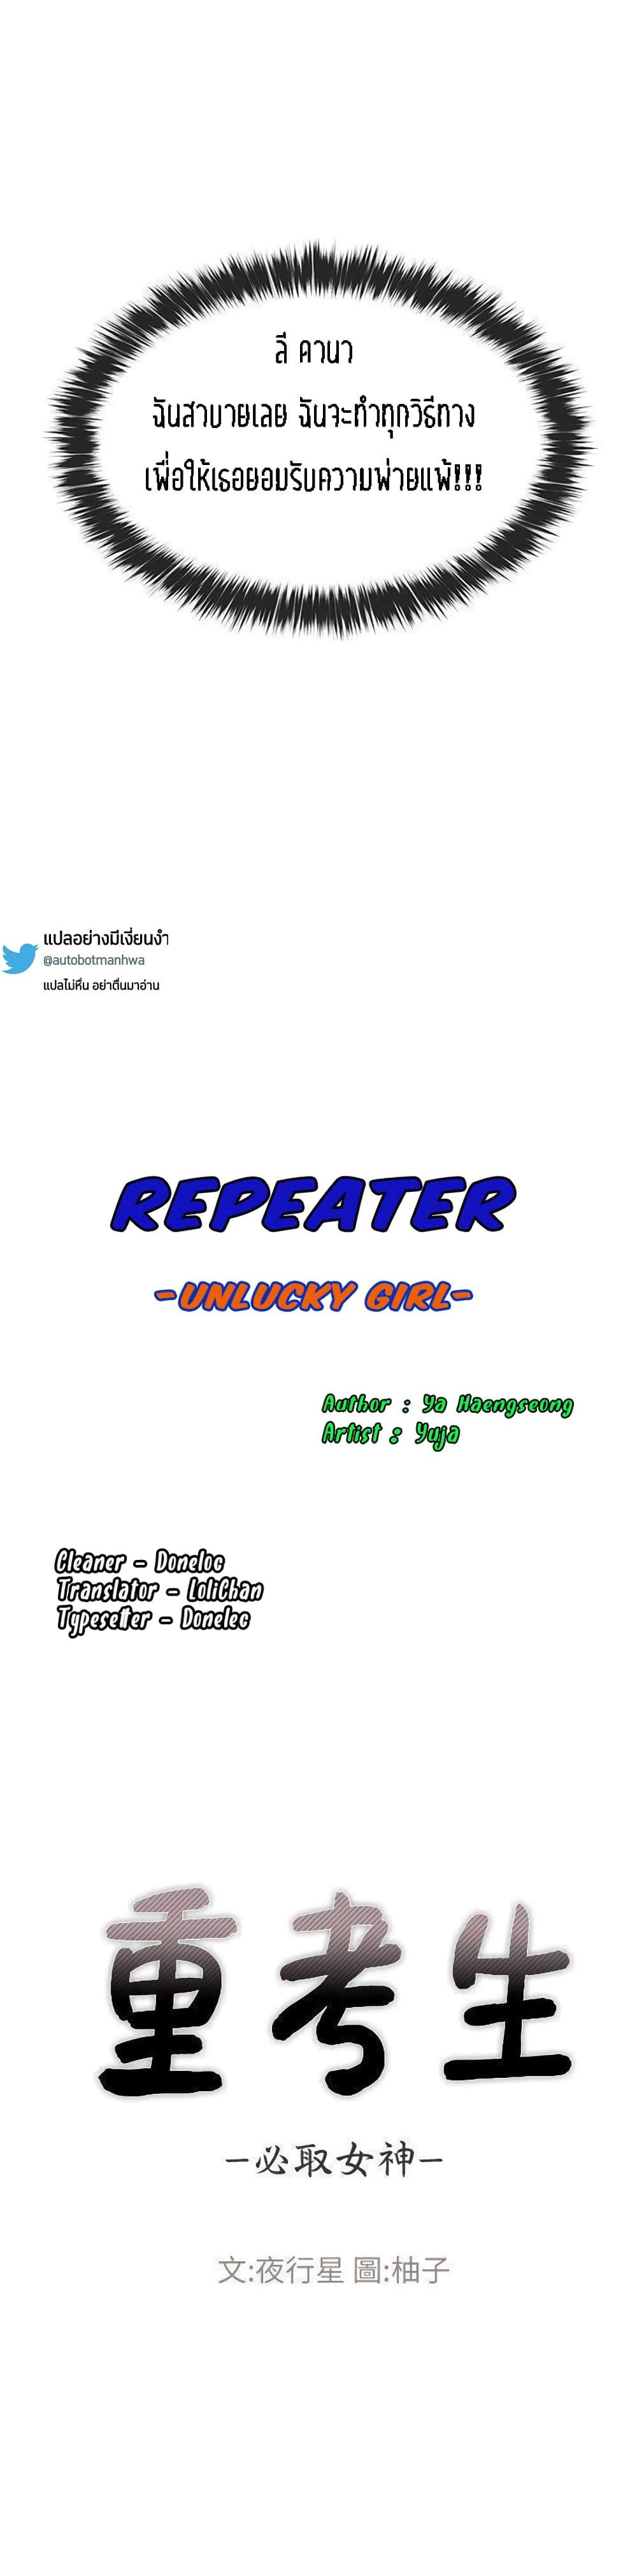 Repeater 12-12